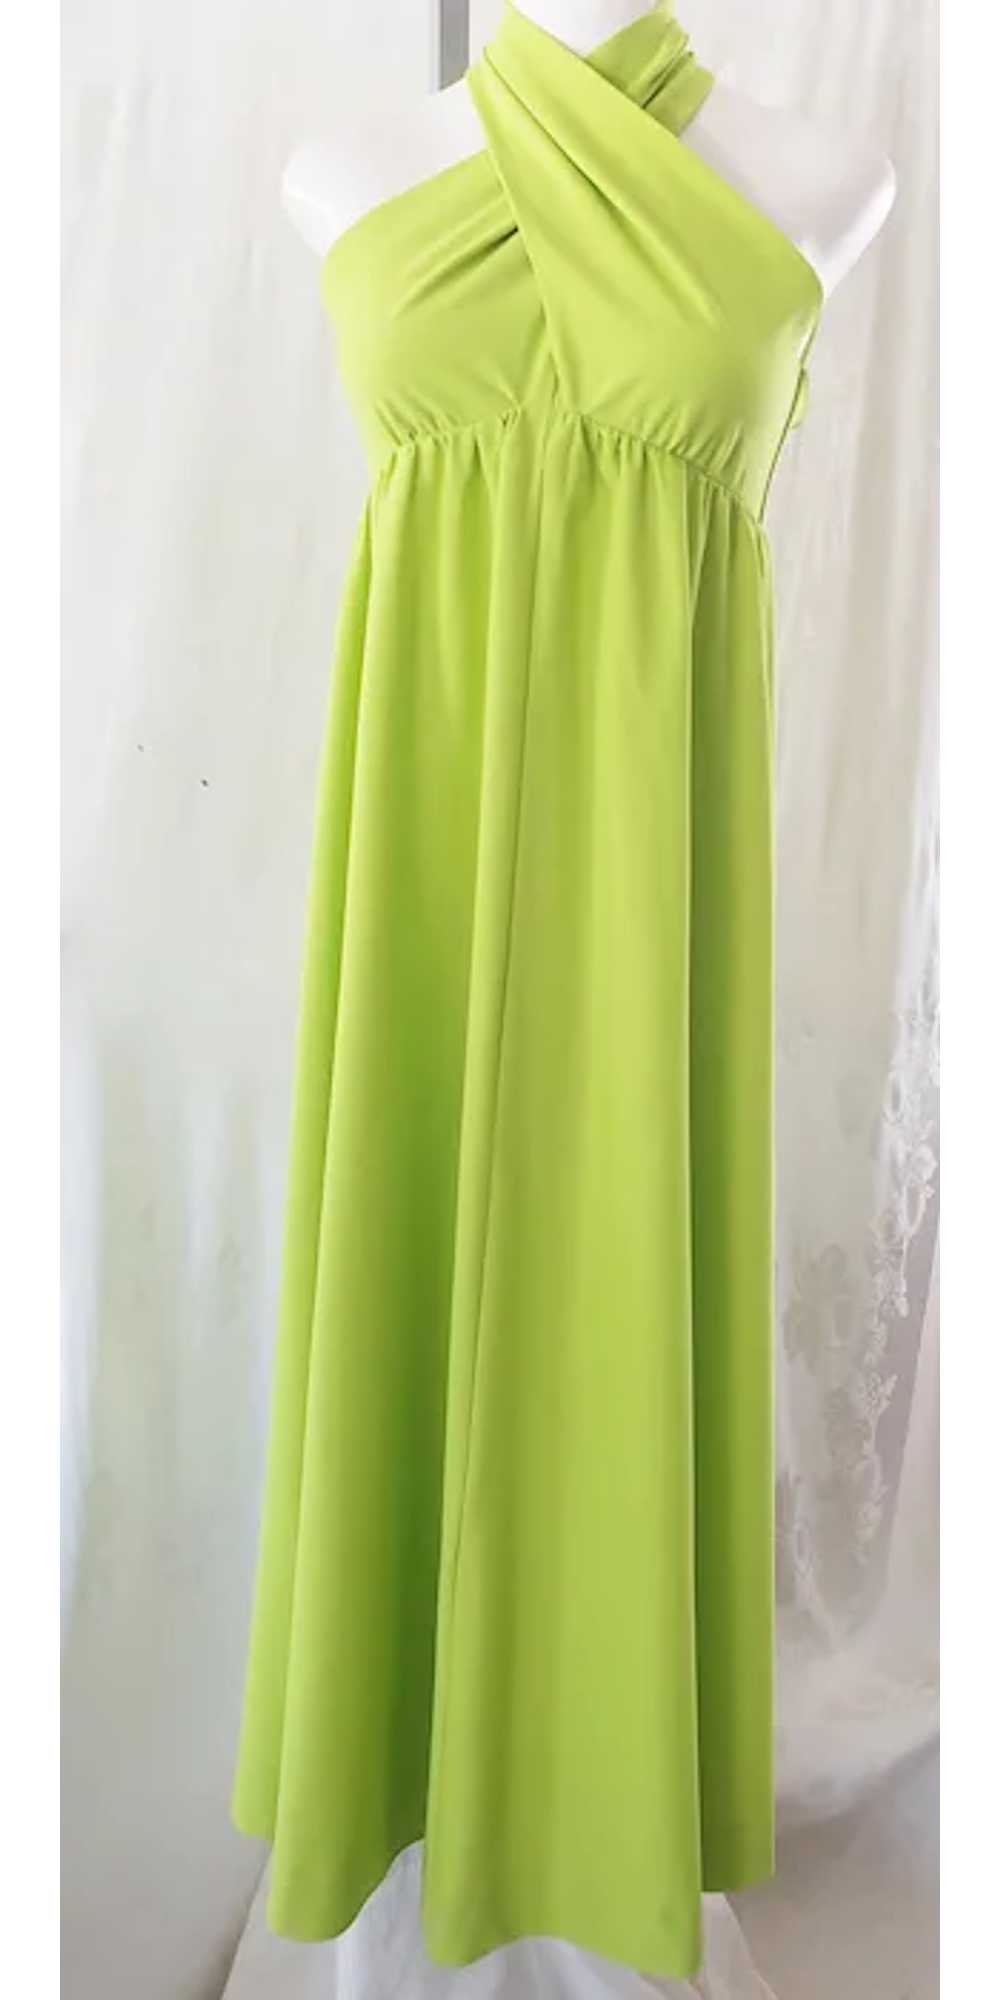 Chartreuse Summer MAXI Sun Dress - image 2